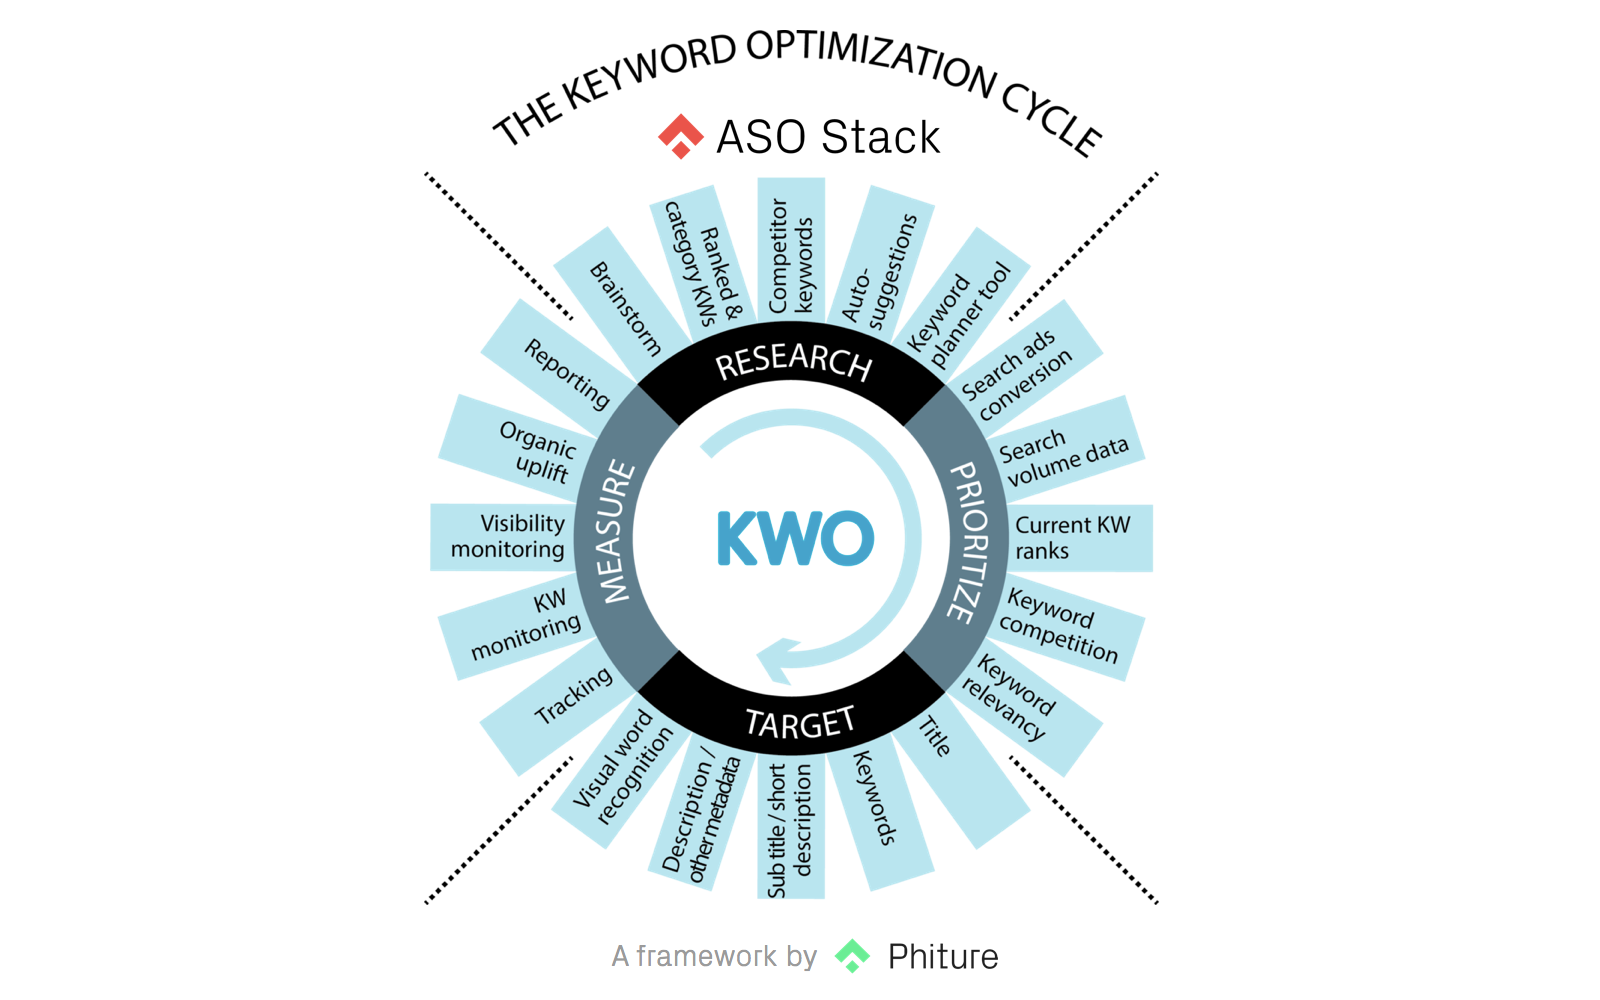 Using The Keyword Optimization Cycle To Increase App Play